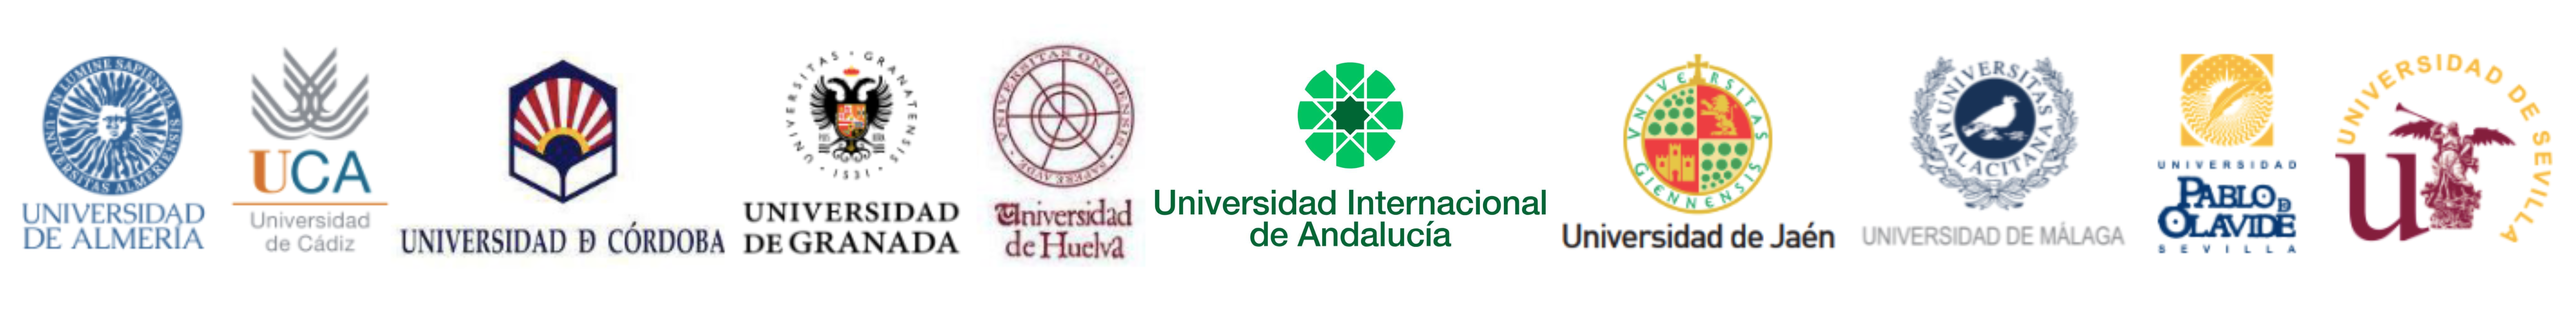 Logotipos de universidades públicas andaluzas